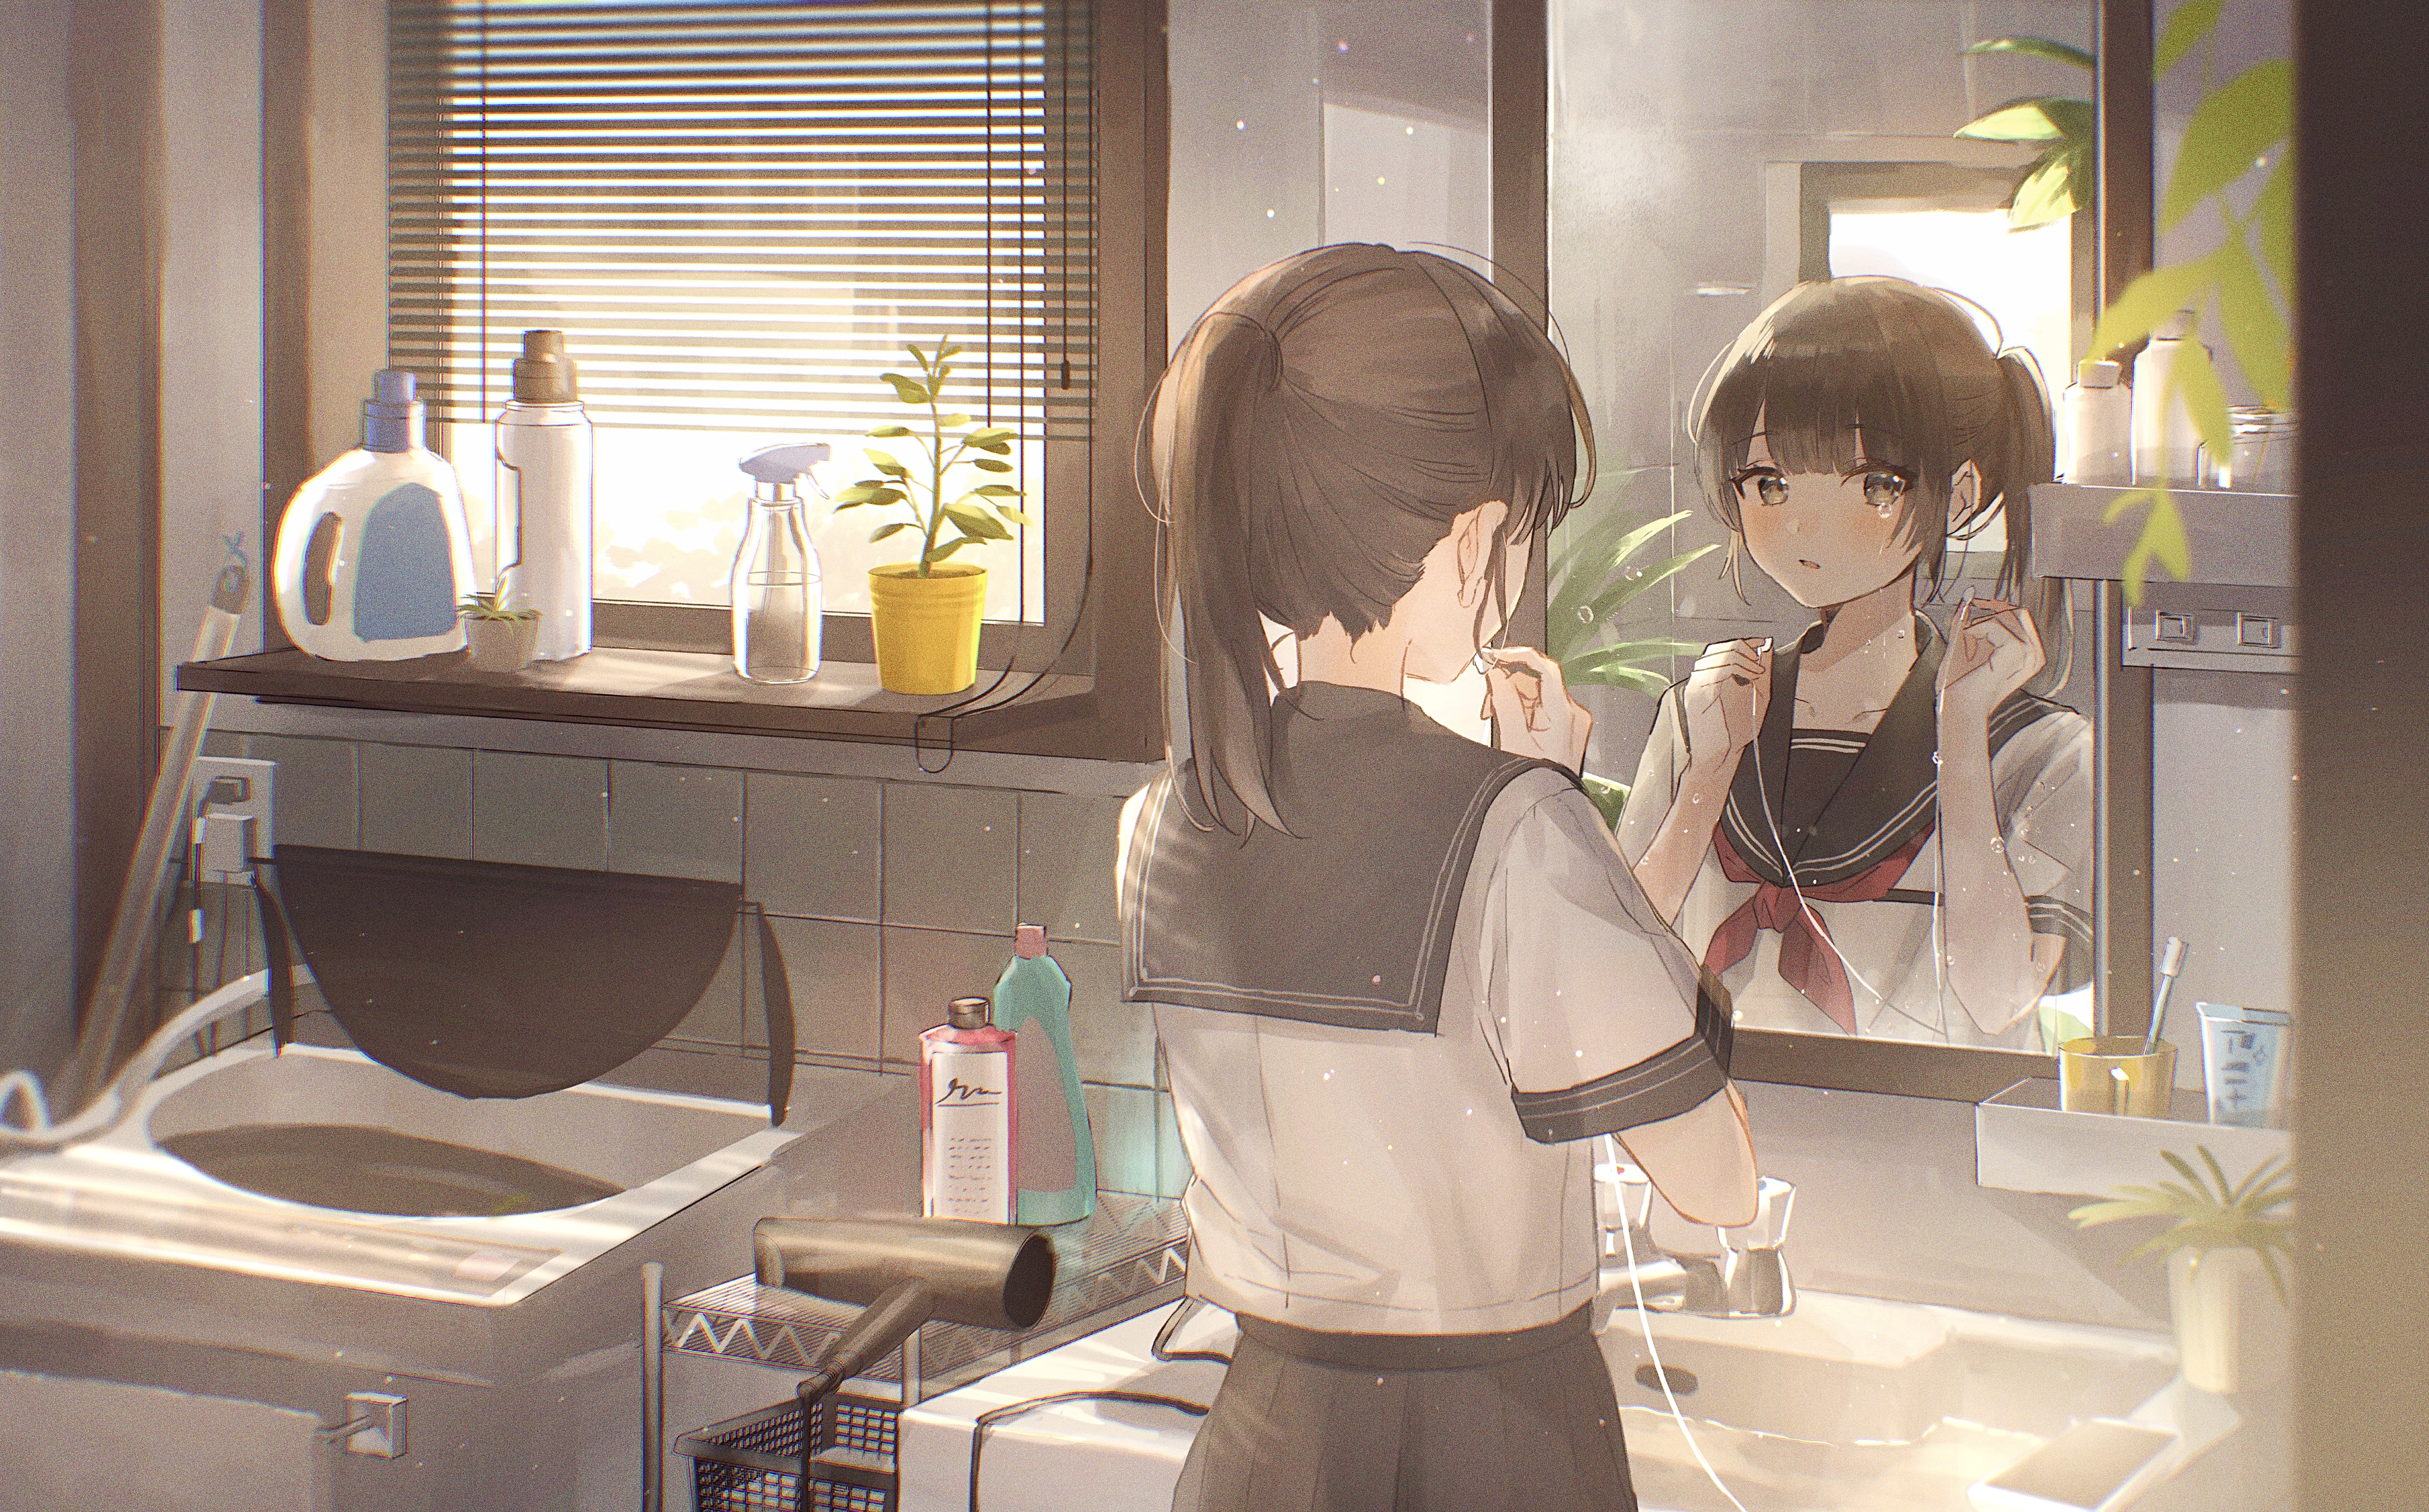 Anime Anime Girls Oyuyu In Bathroom Mirror Reflection Earphones Tears Brunette Ponytail School Unifo 4096x2550